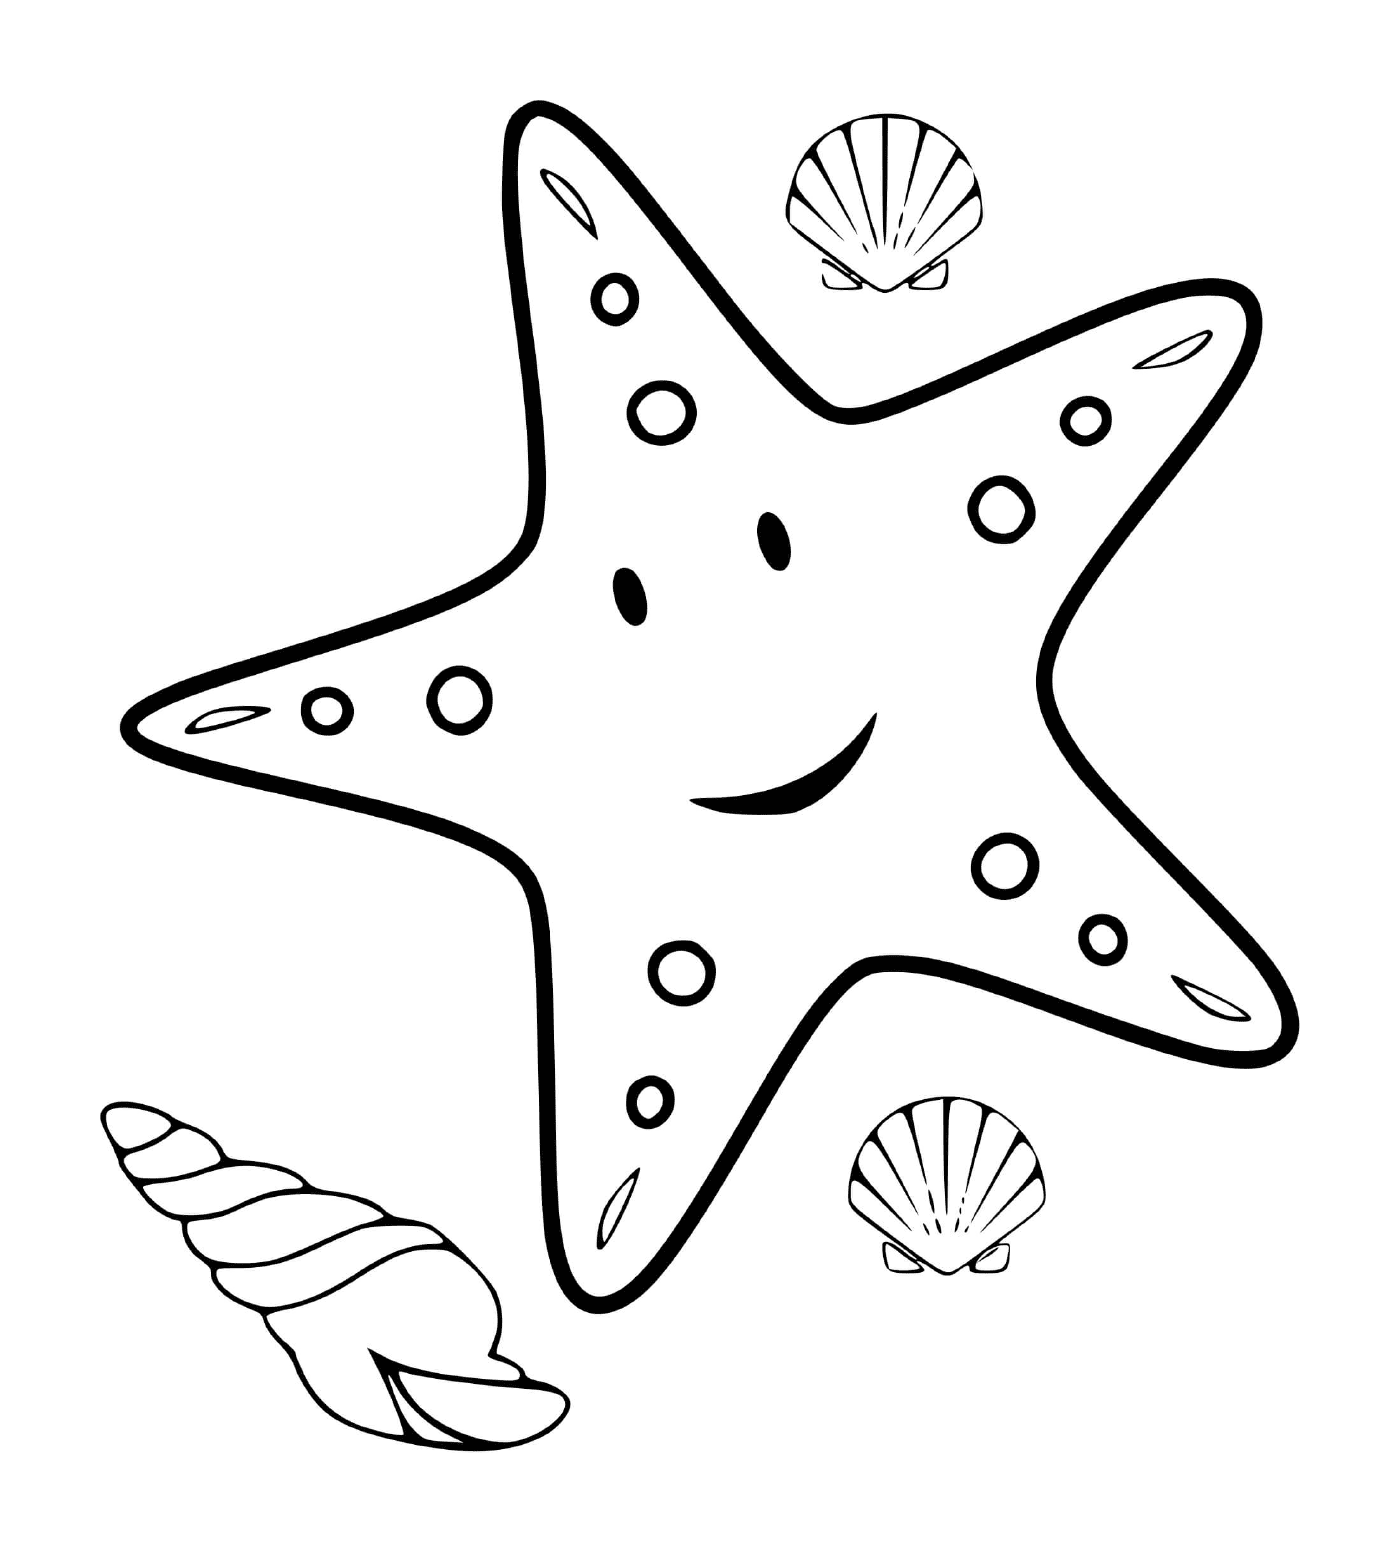  A starfish accompanied by sea shells 